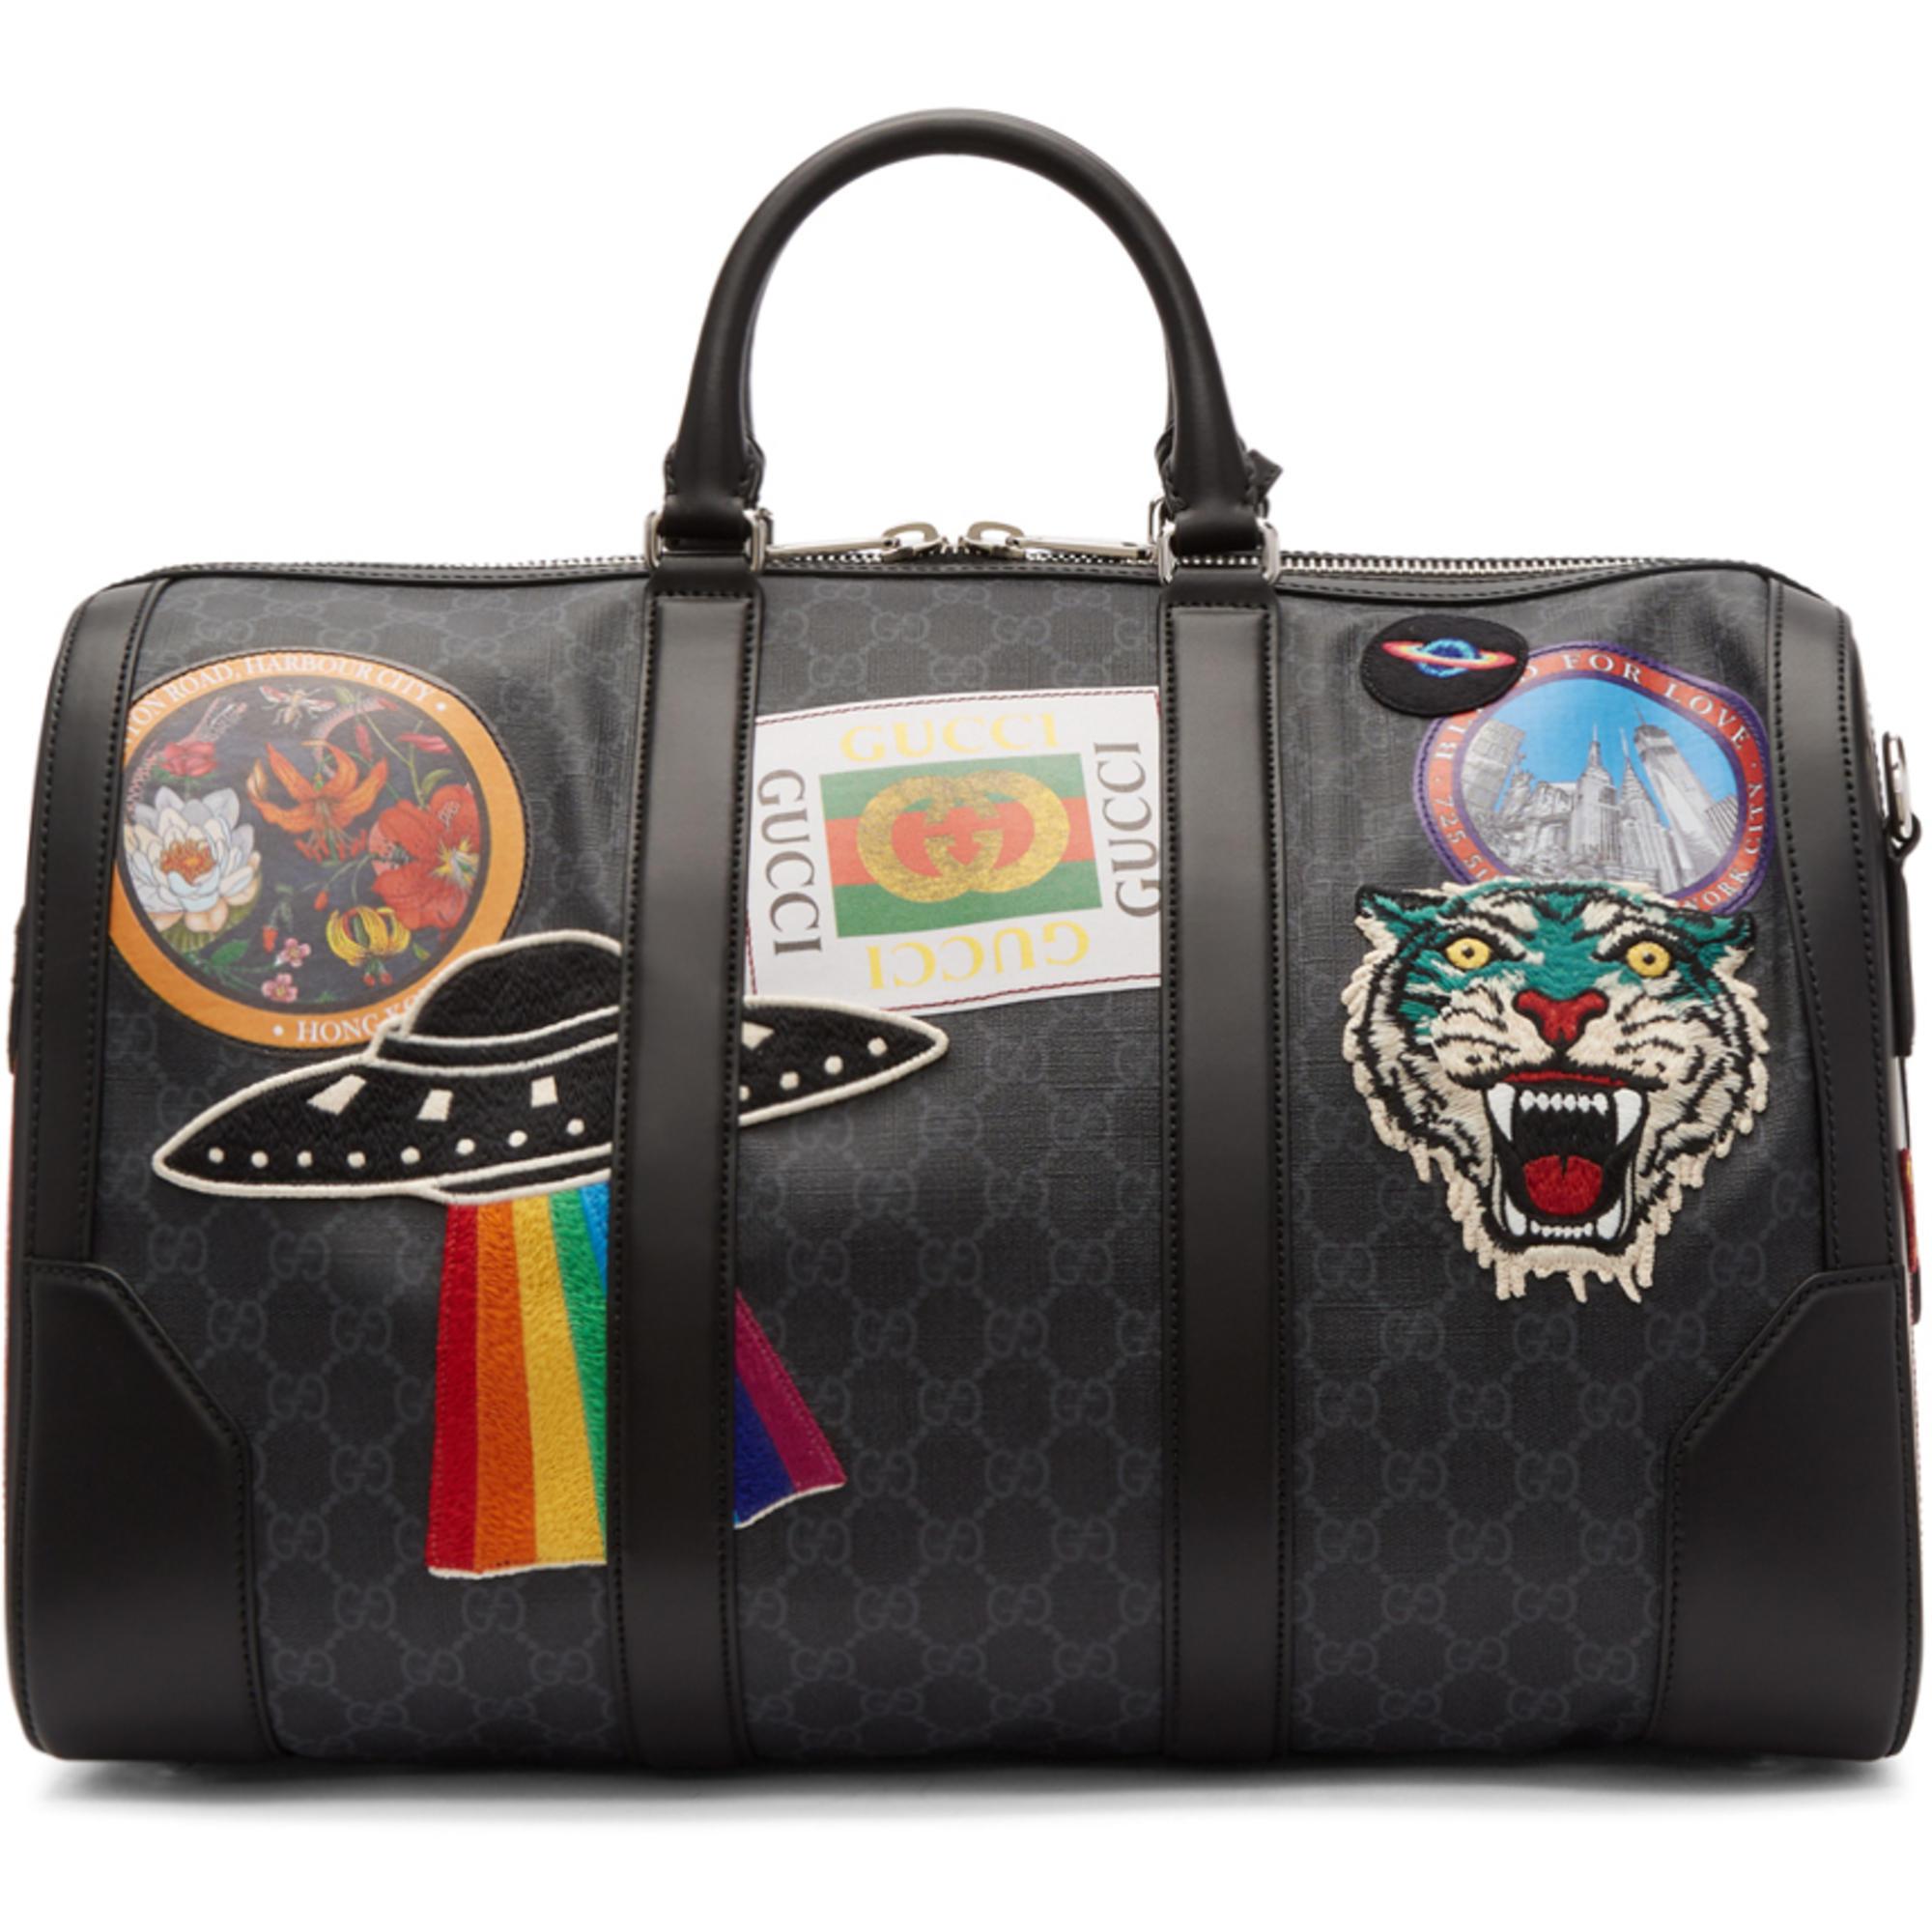 Gucci Black Gg Supreme Patches Duffle Bag